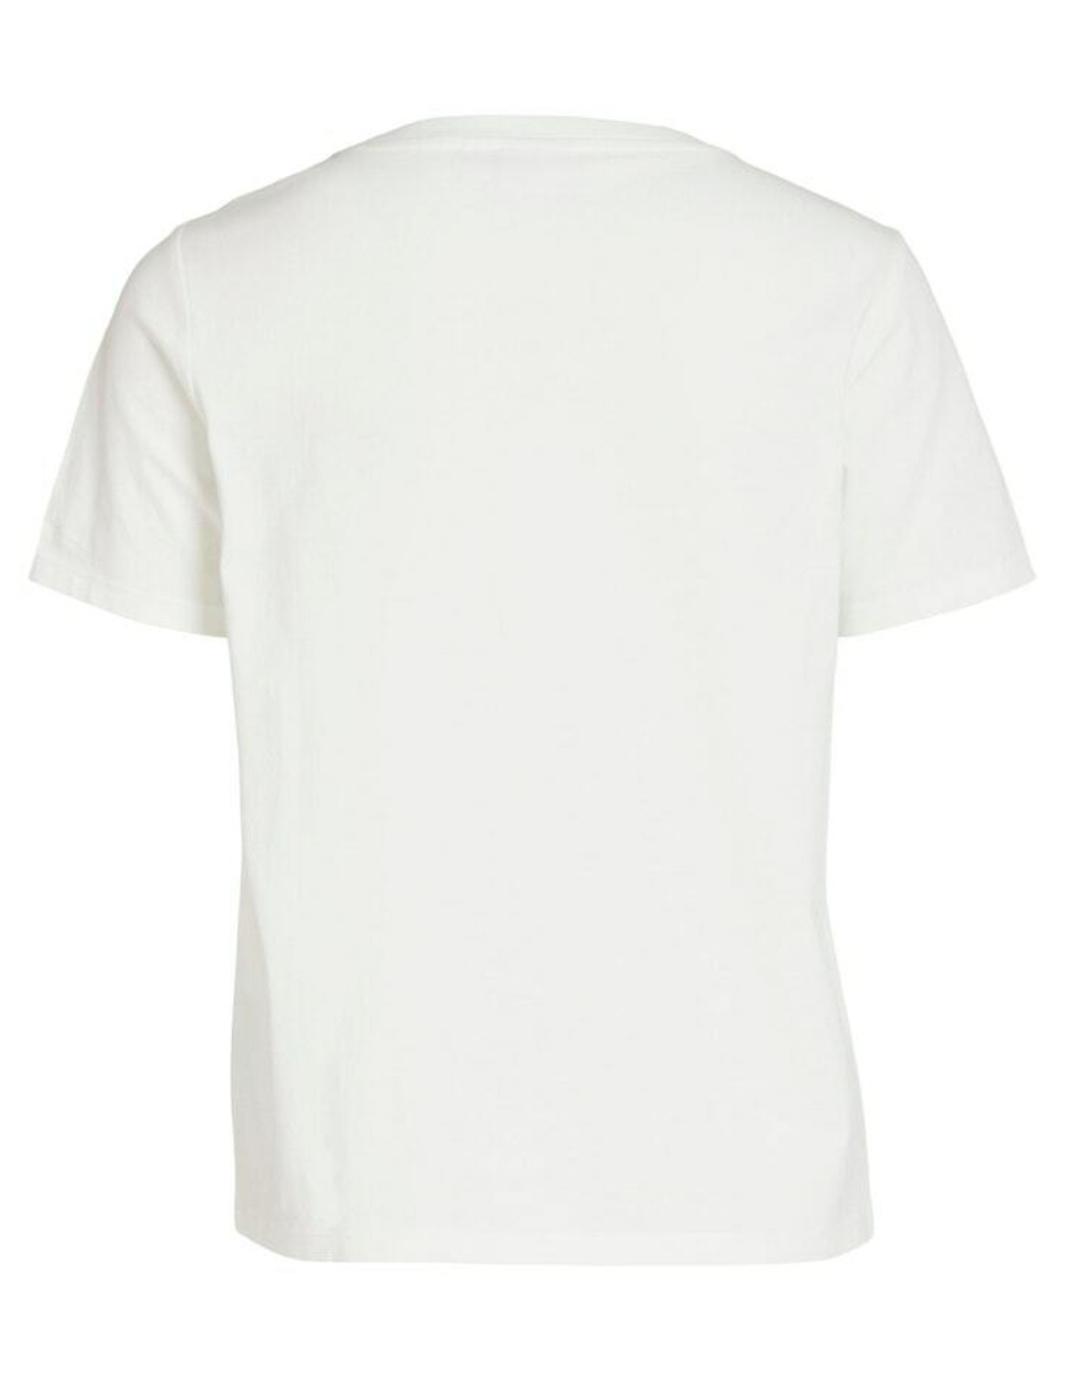 Camiseta Vila Mattea blanca de manga corta para mujer